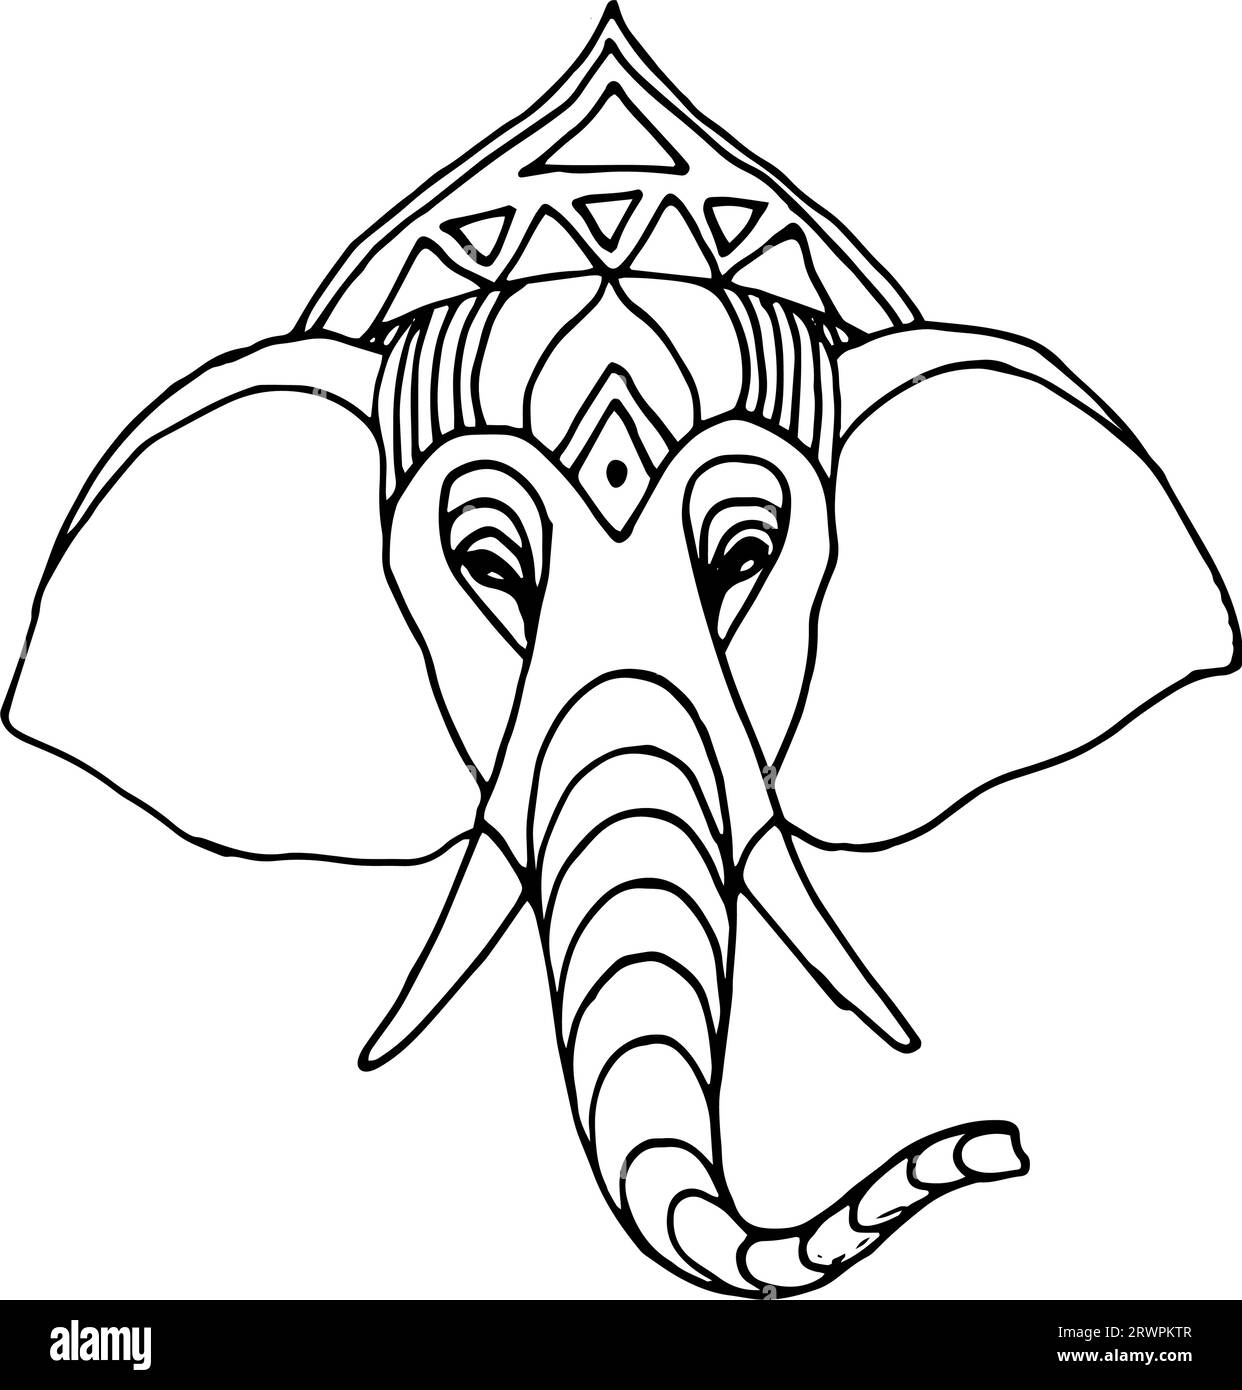 Ganesha doodling style.Happy Diwali.Vector illustration of Hindu lord of wisdom.Hand drawn elephant head. Stock Vector